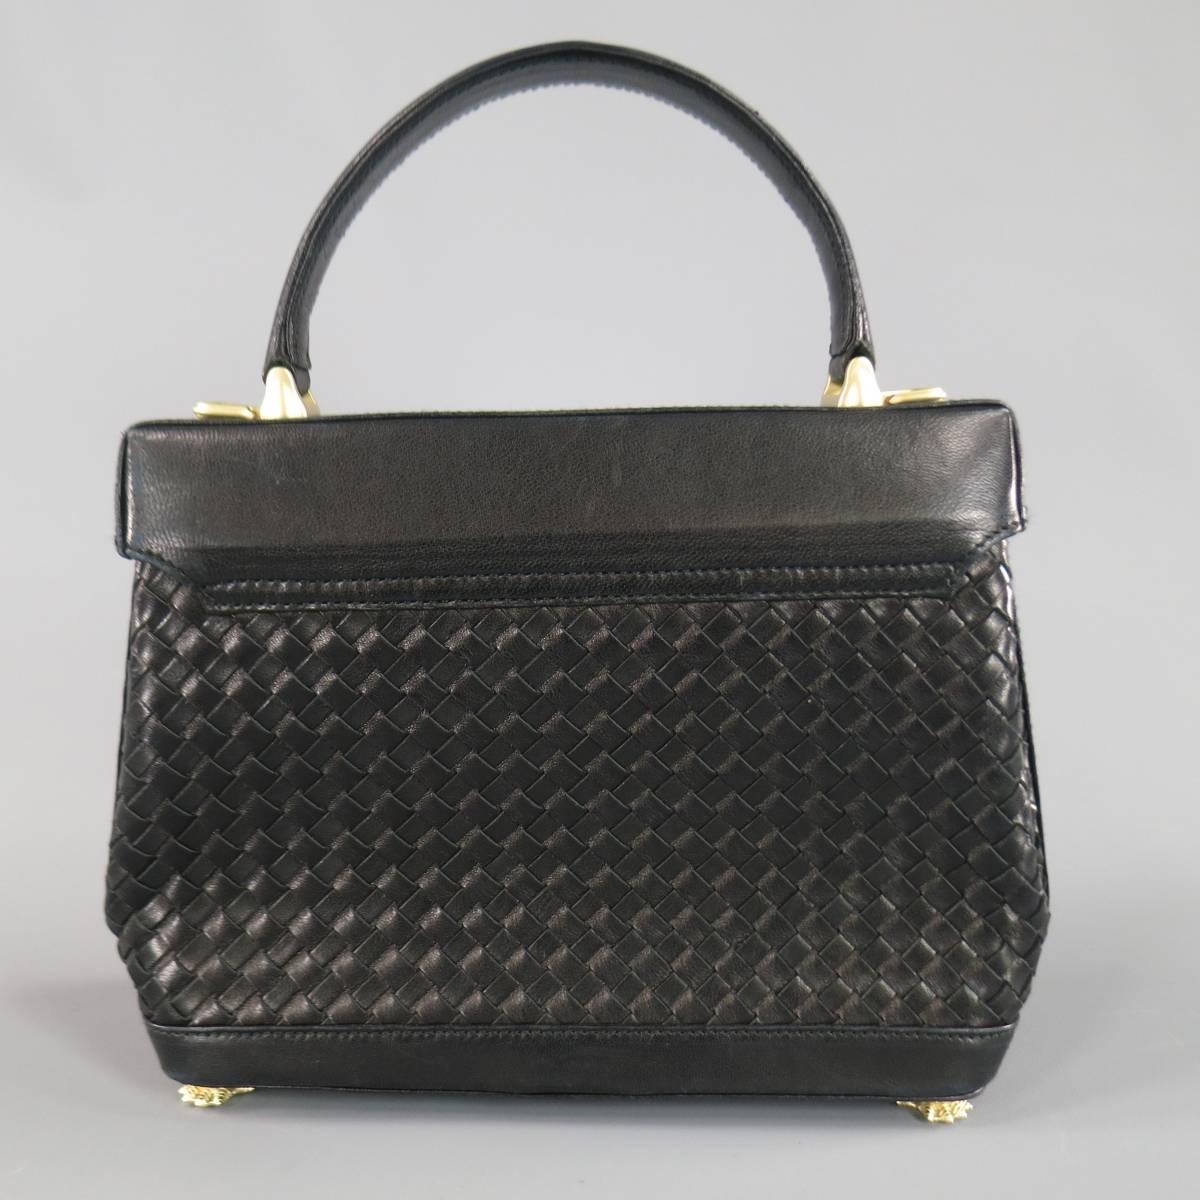 KIESELSTEIN-CORD Black Woven Leather Light Gold Crocodile Clasp Handbag 2